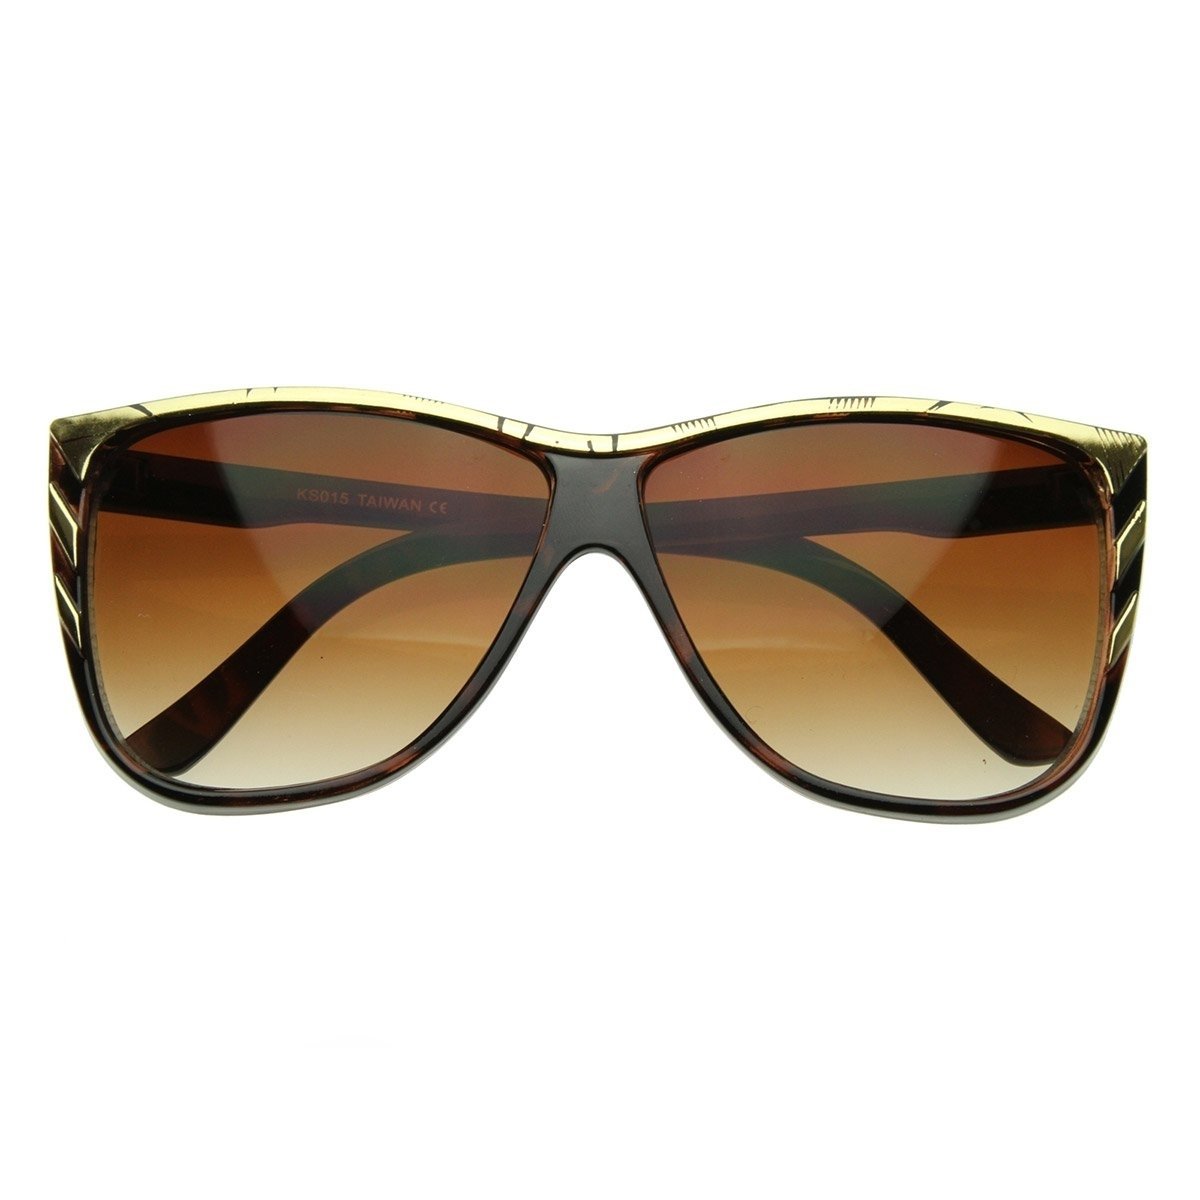 New Larger Modern Retro Fashion Gold Tip Point Detail Horn Rimmed Sunglasses - Black